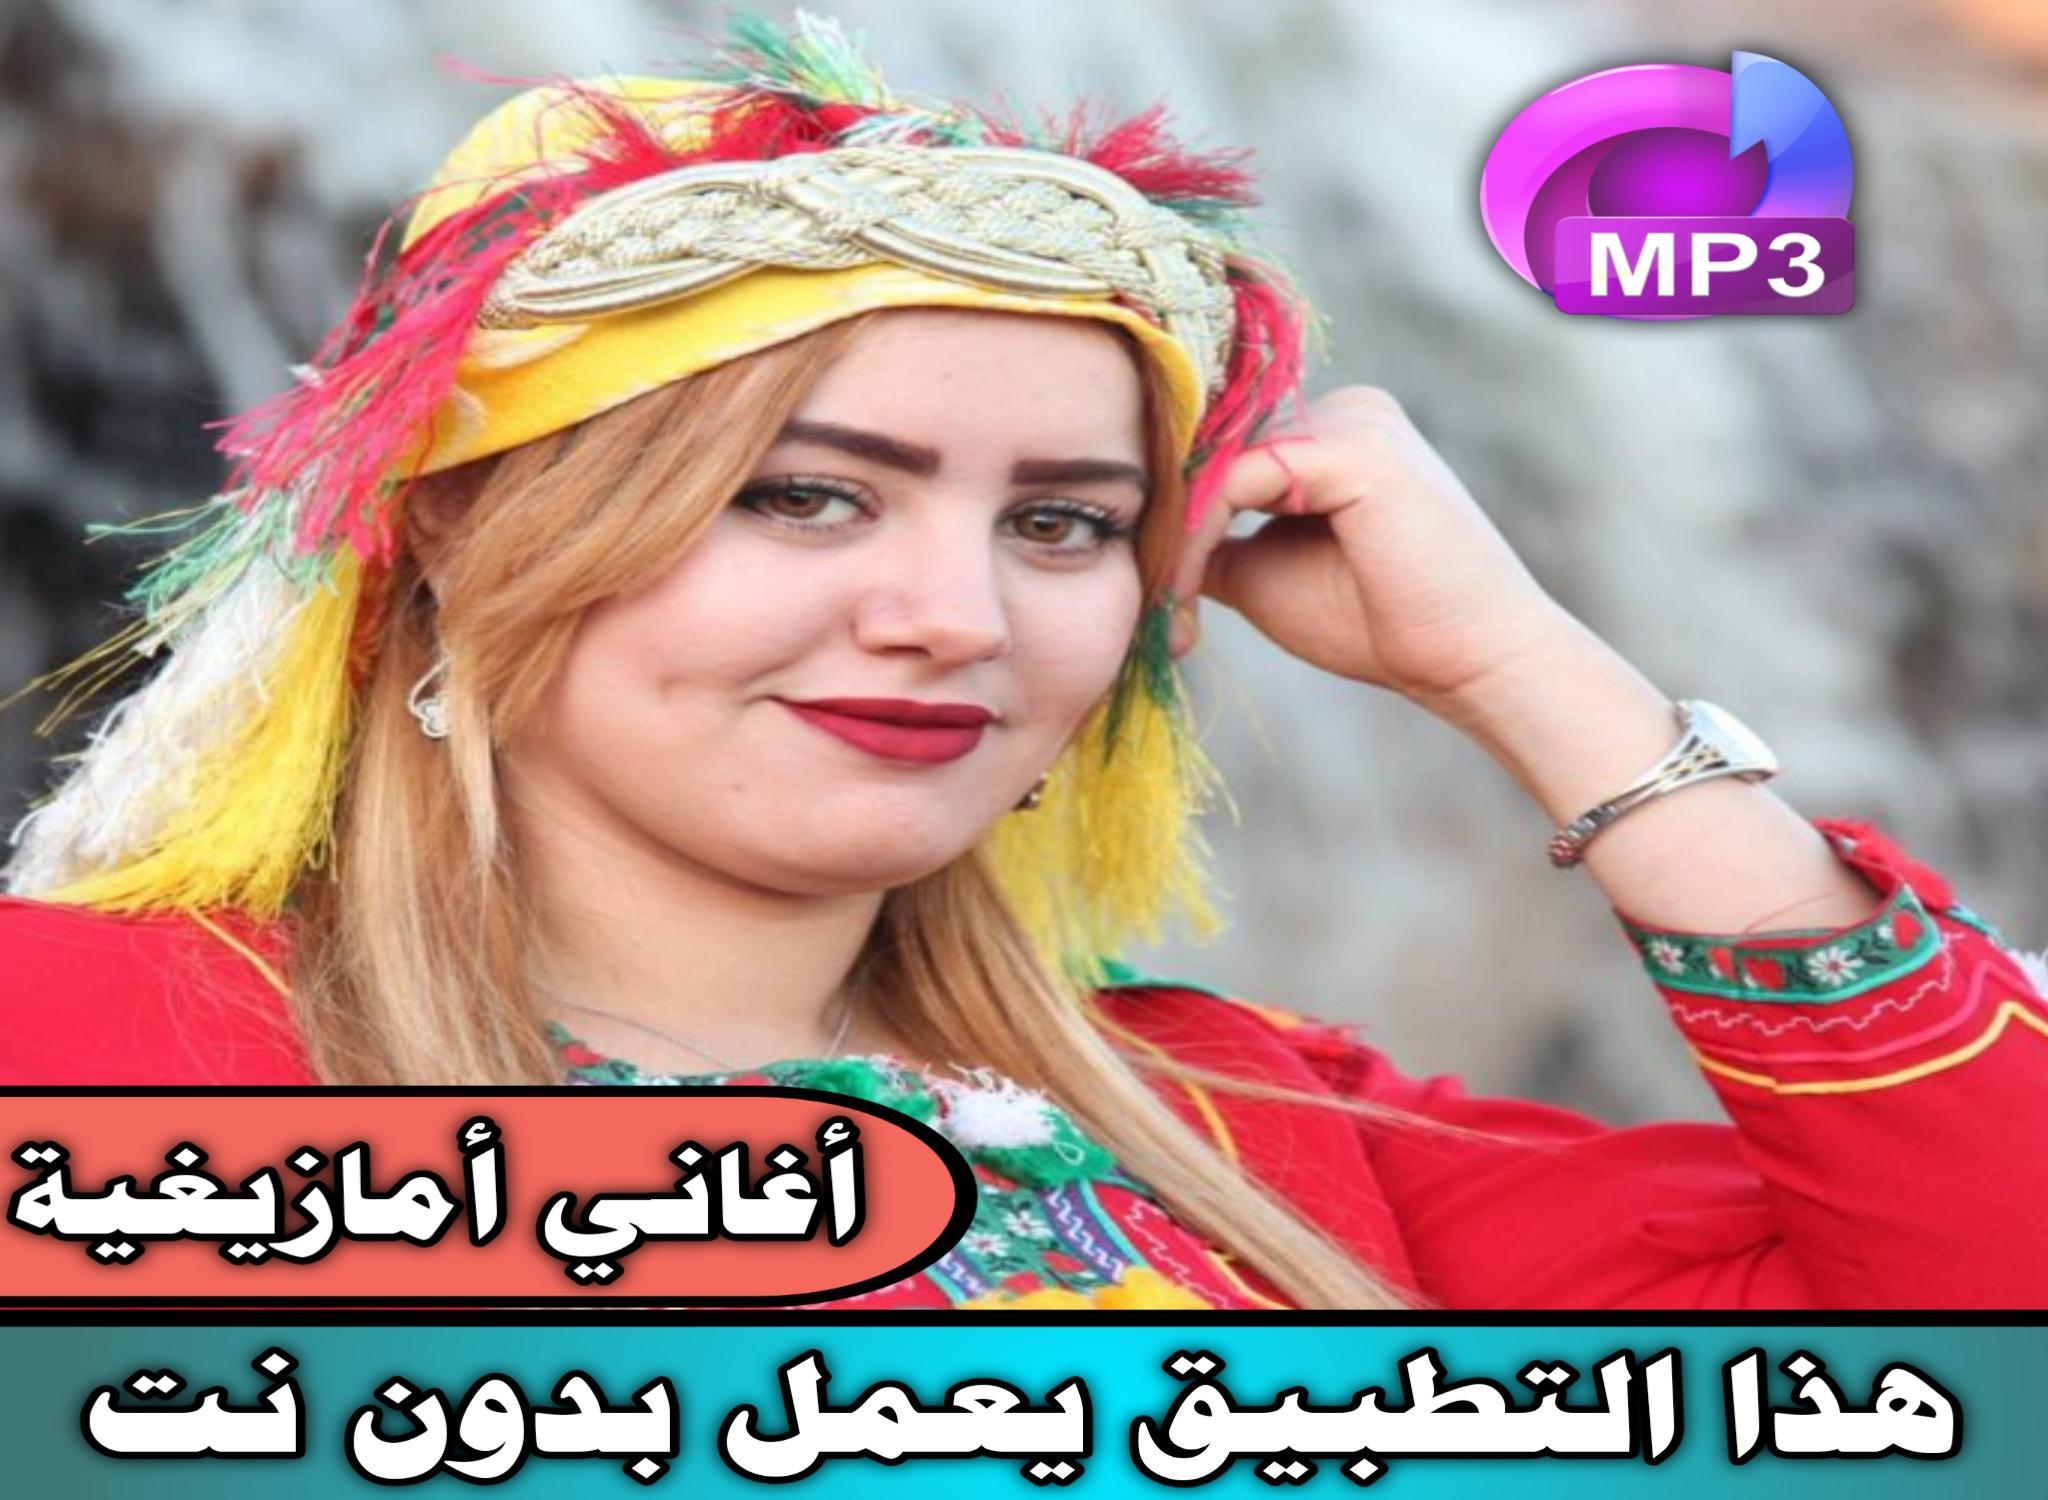 أغاني أمازيغية بدون نت 2020| aghani amazighi mp3‎ APK for Android Download